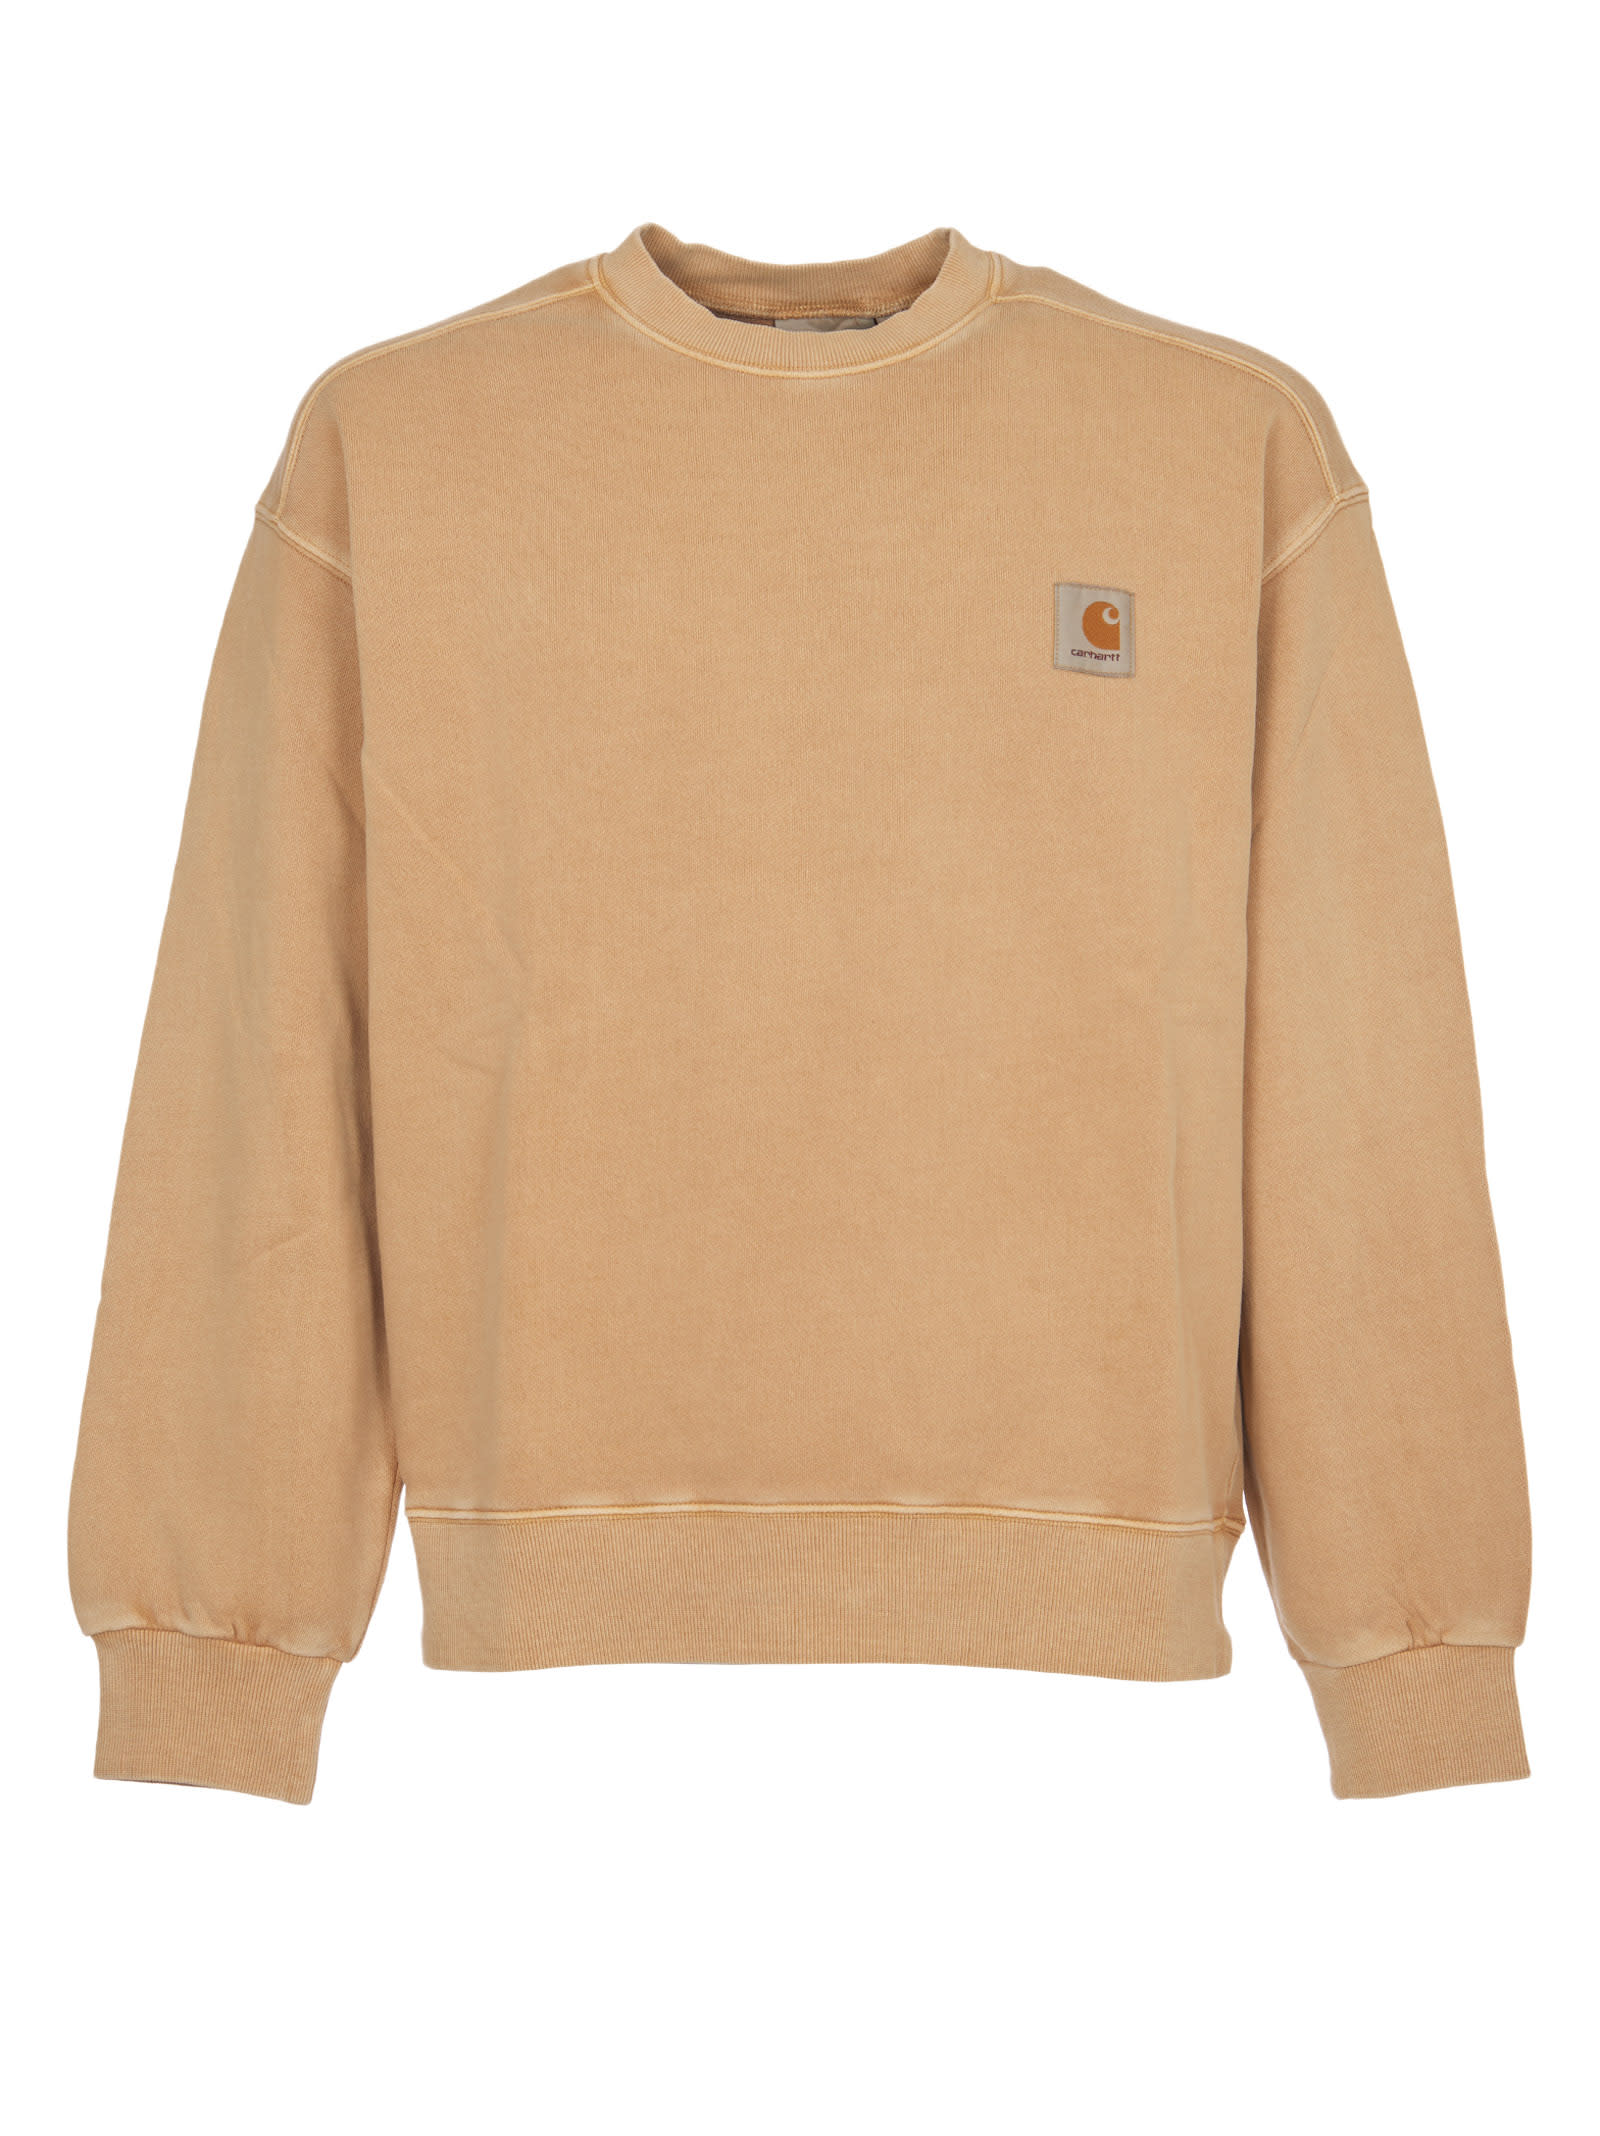 Carhartt Dusty Brown Sweatshirt